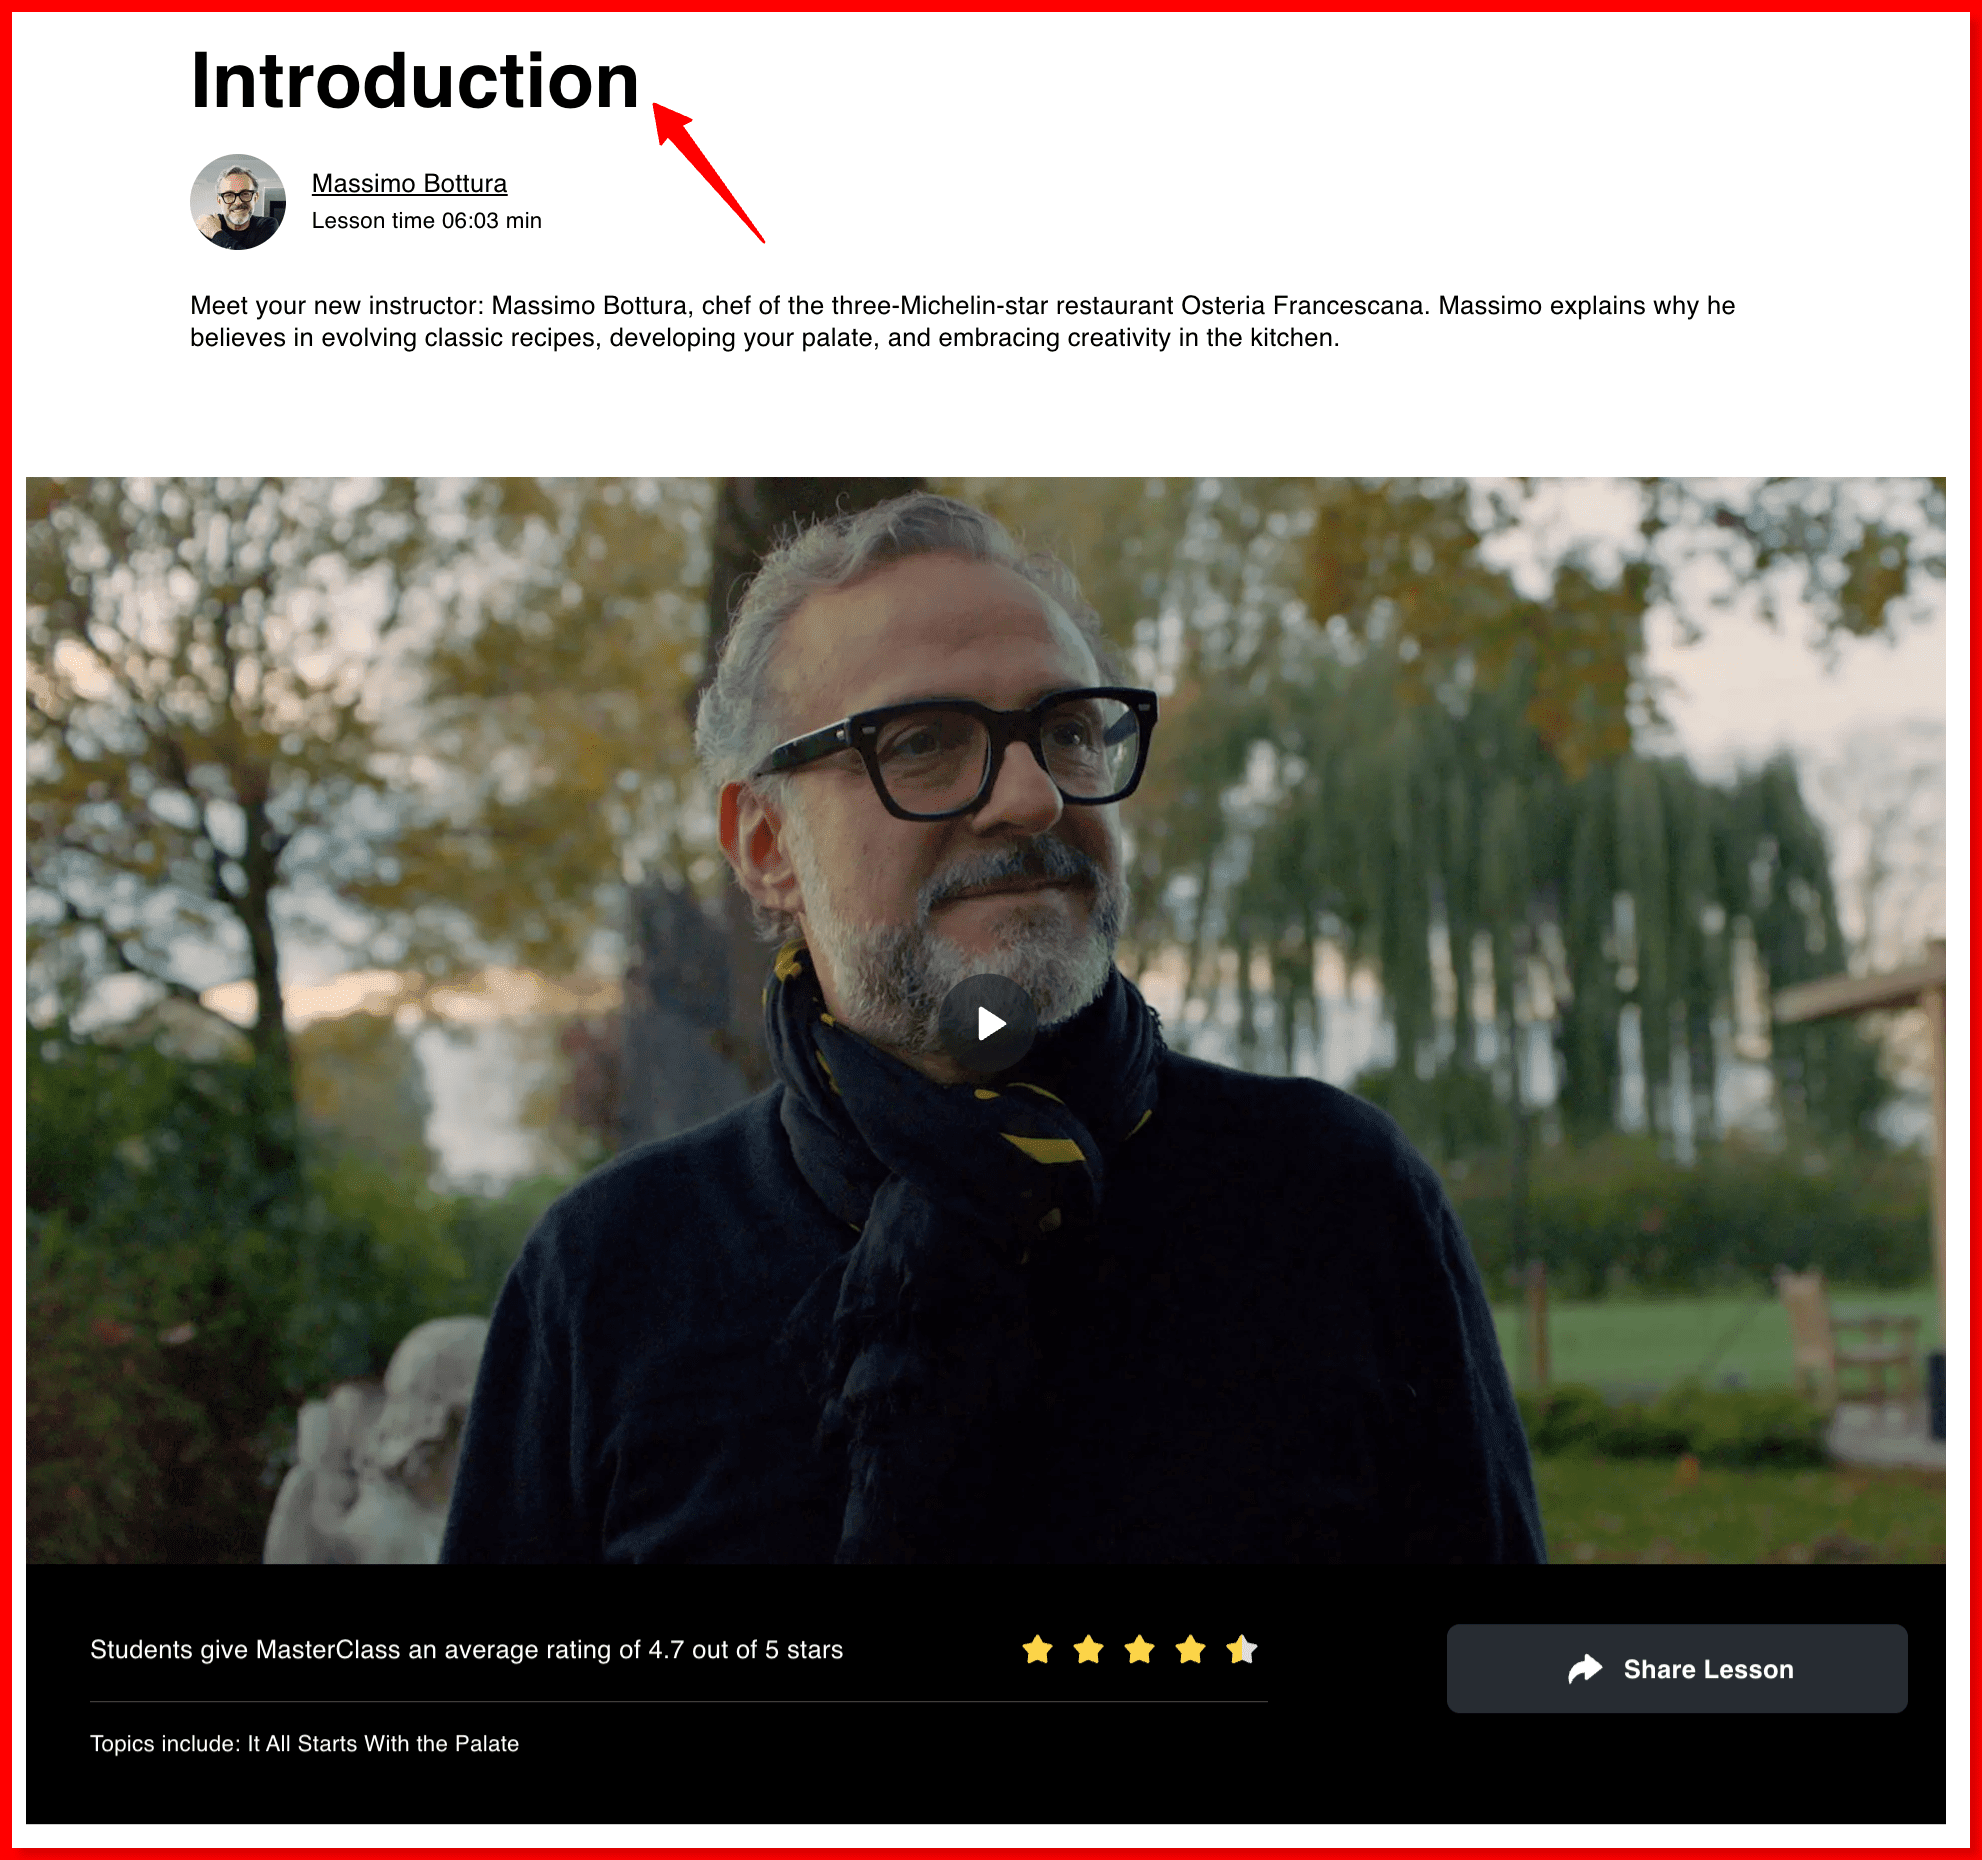 Massimo Bottura MasterClass Introduction